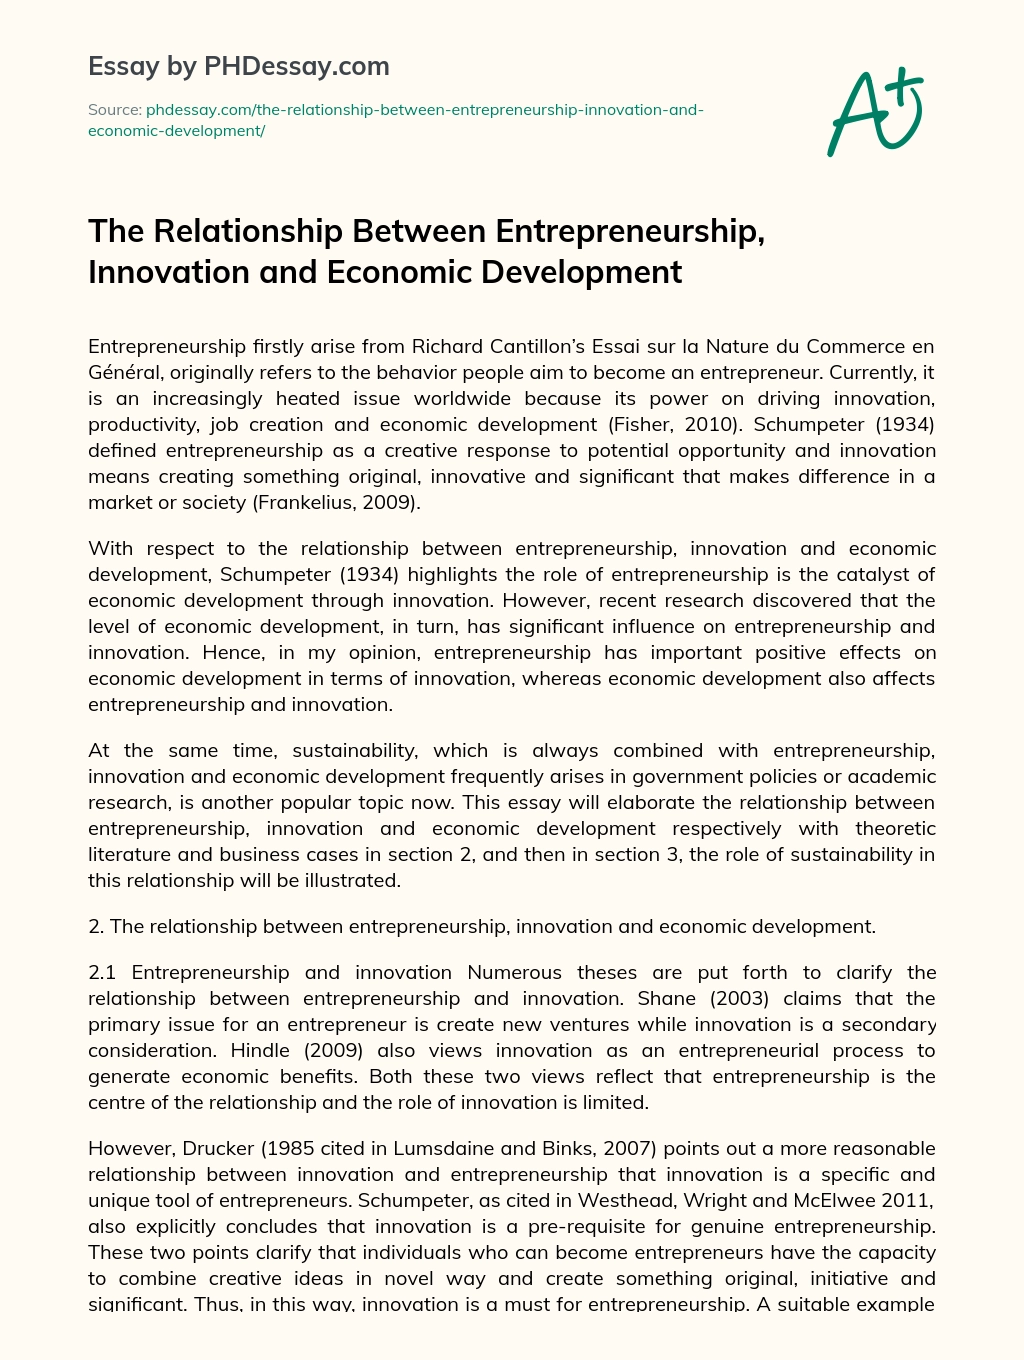 The Relationship Between Entrepreneurship, Innovation and Economic Development essay